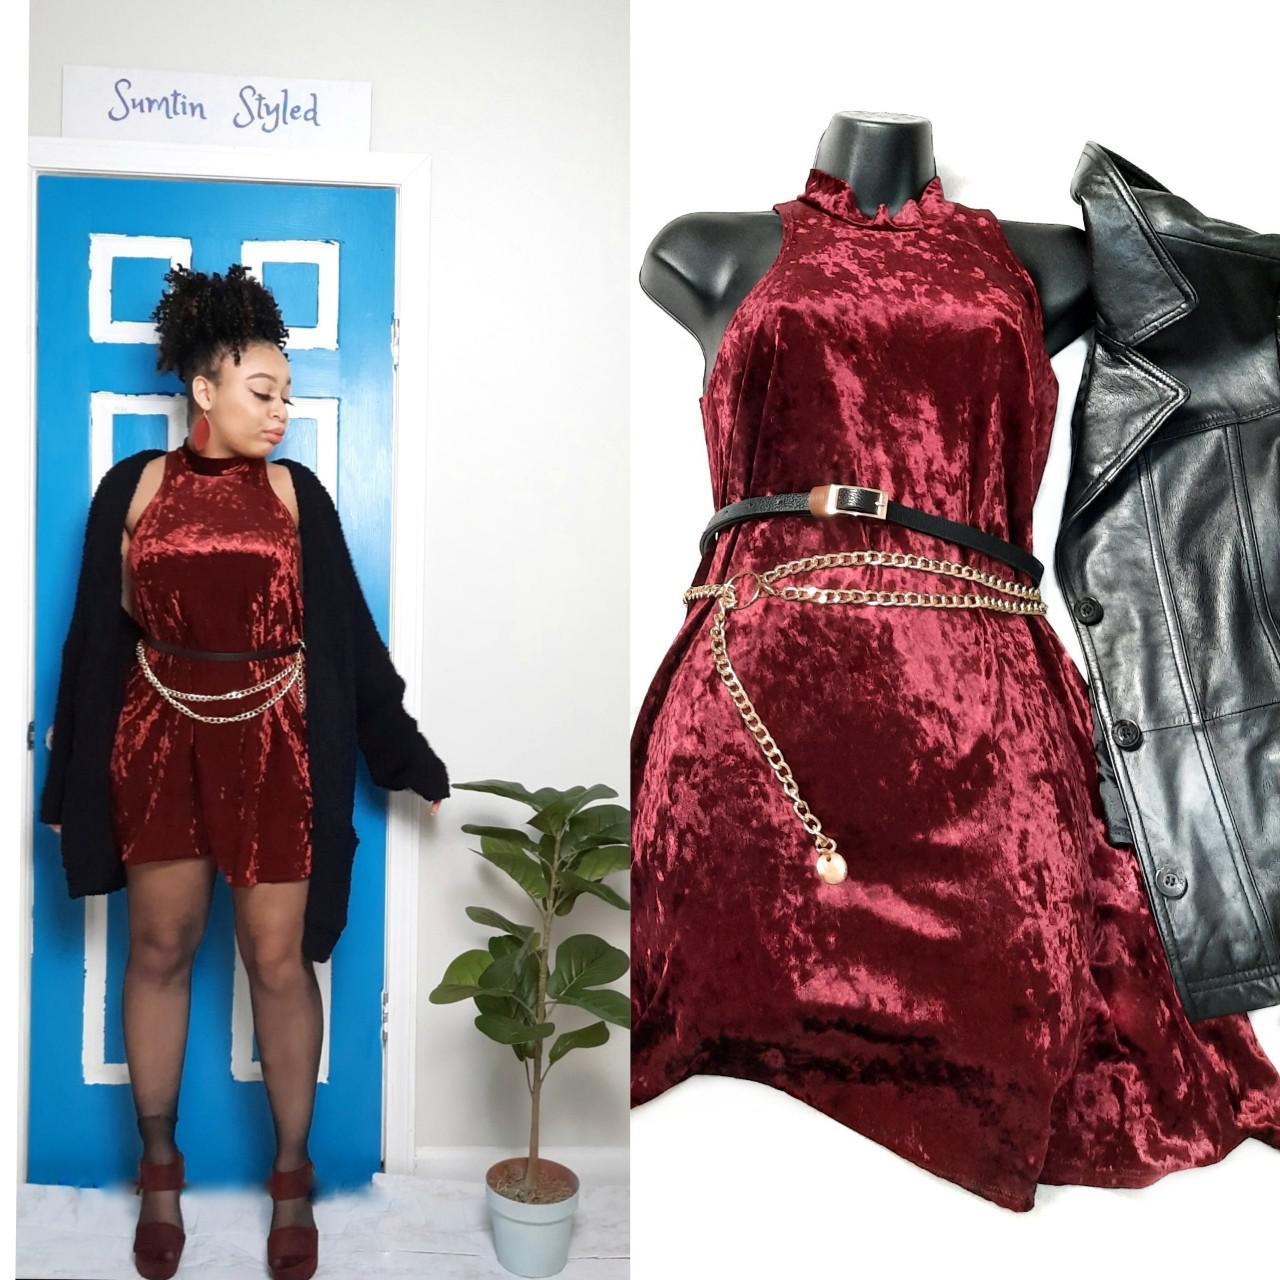 Product Image 1 - Fall Favorites
*
Red velvet dress, size